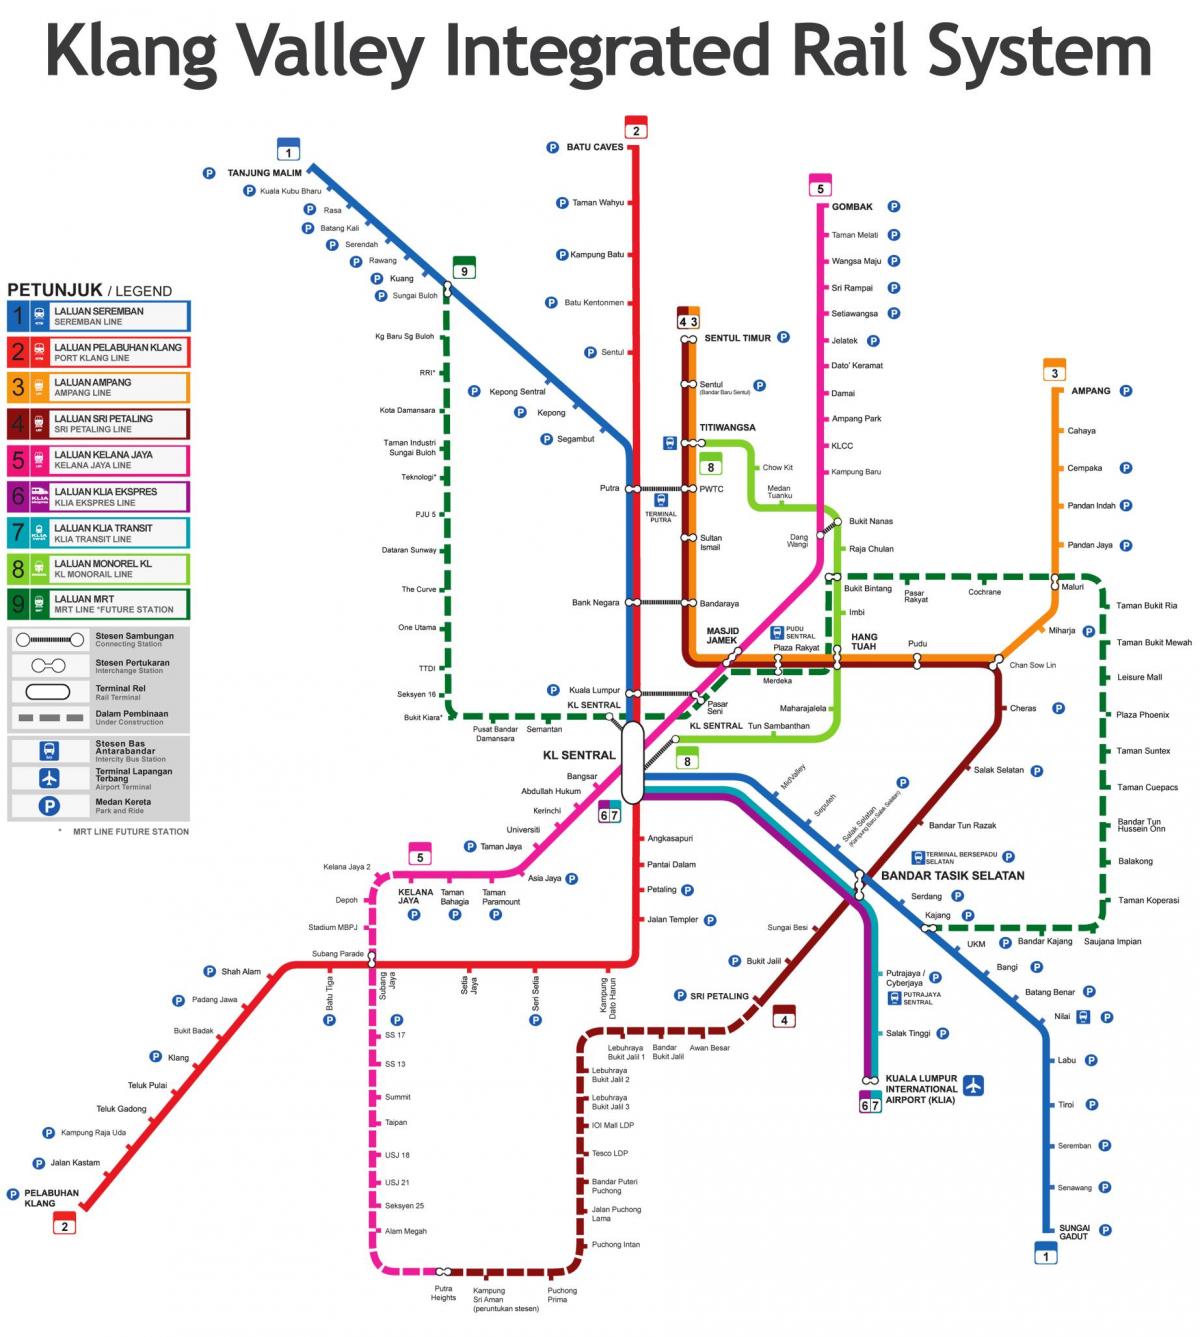 malesia juna kartta 2016